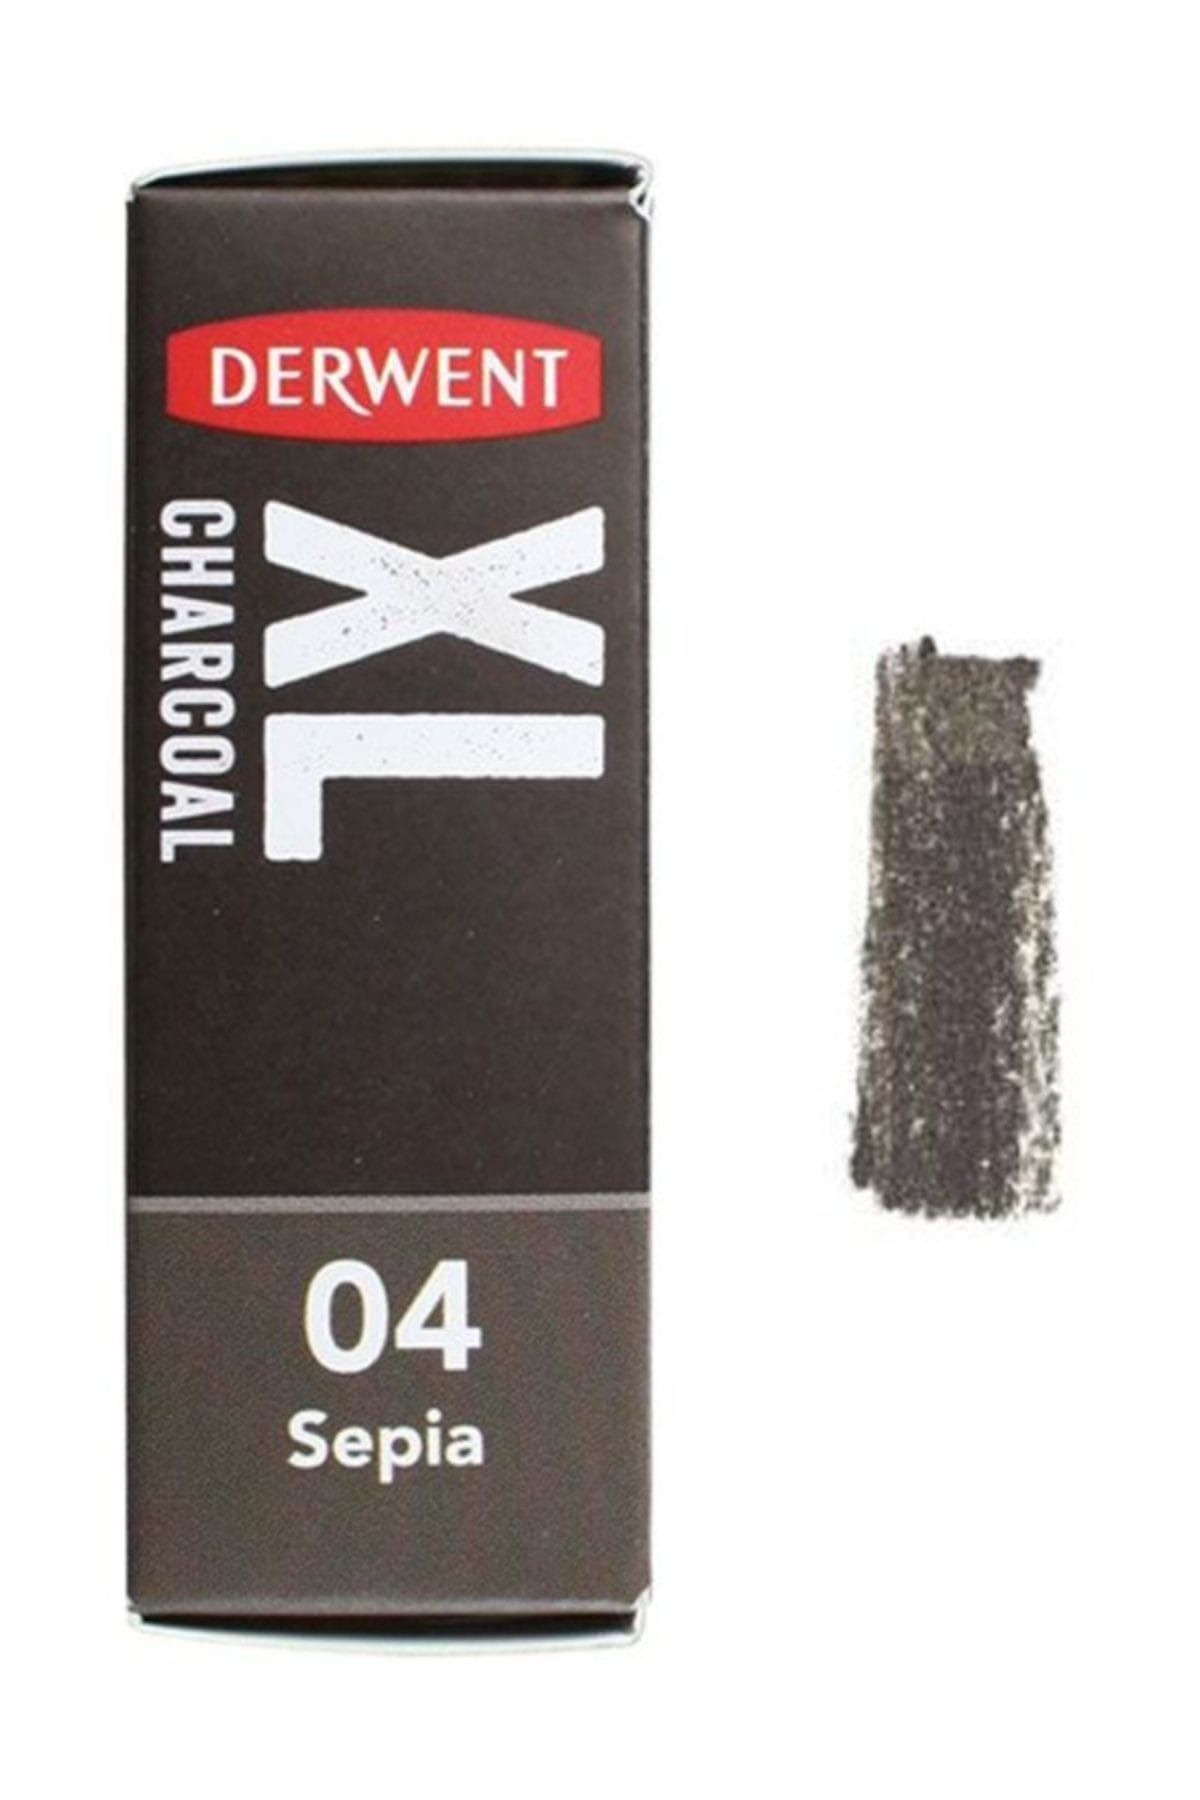 Derwent XL Charcoal Blocks Kalın Füzen 04 Sepia